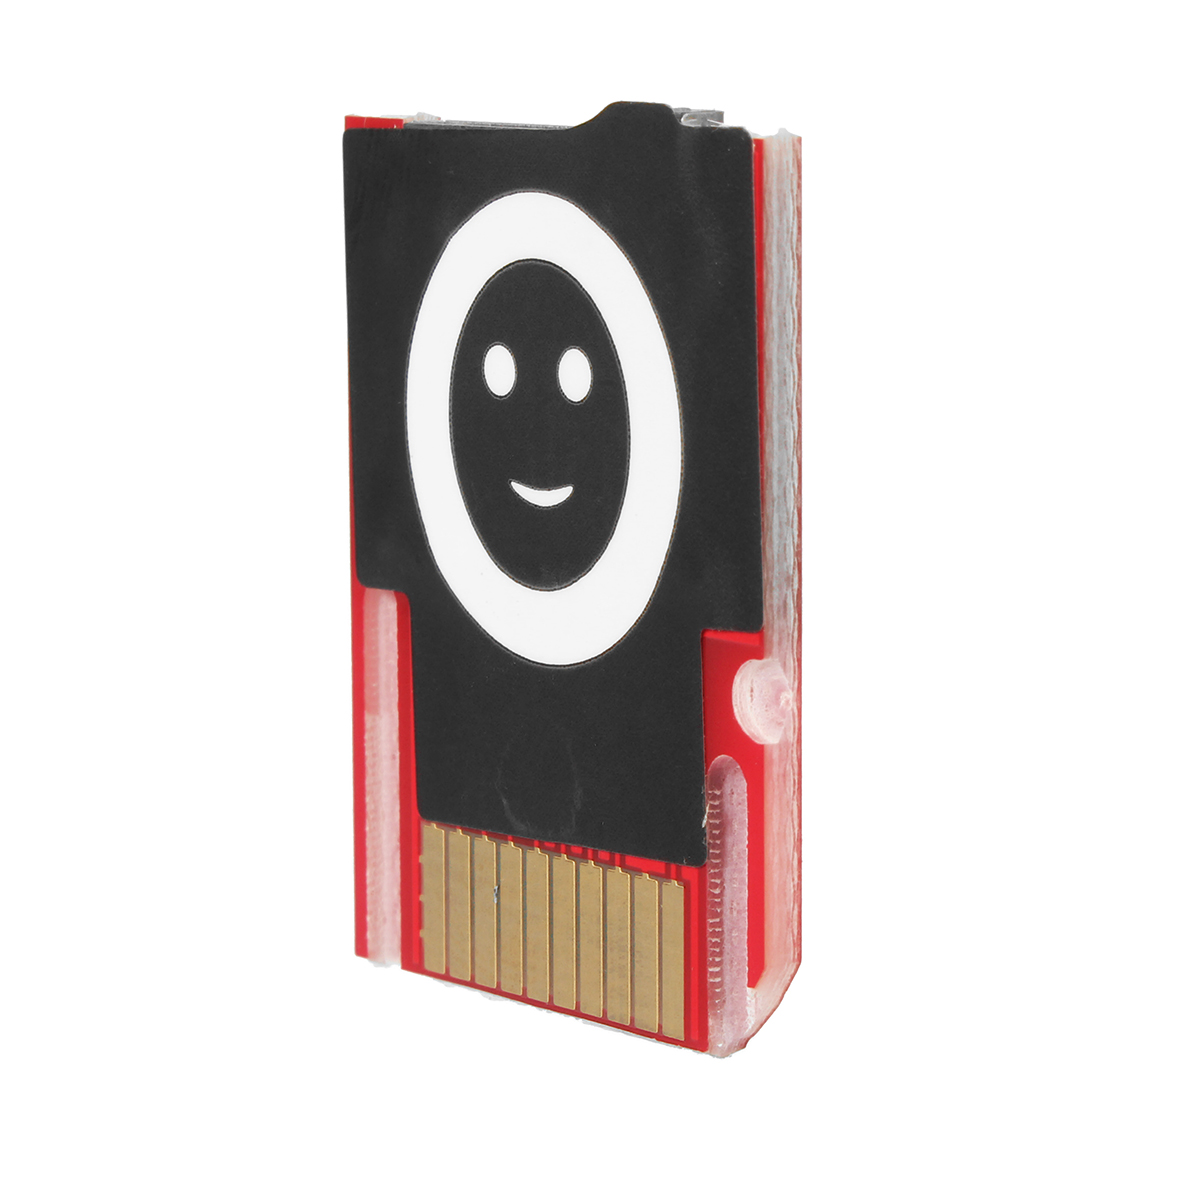 Mini-Game-Card-Cover-Adapter-For-PSVITA-SD2-Vita-PS-Vita-1000-2000-SD-Memory-Card-1207134-3